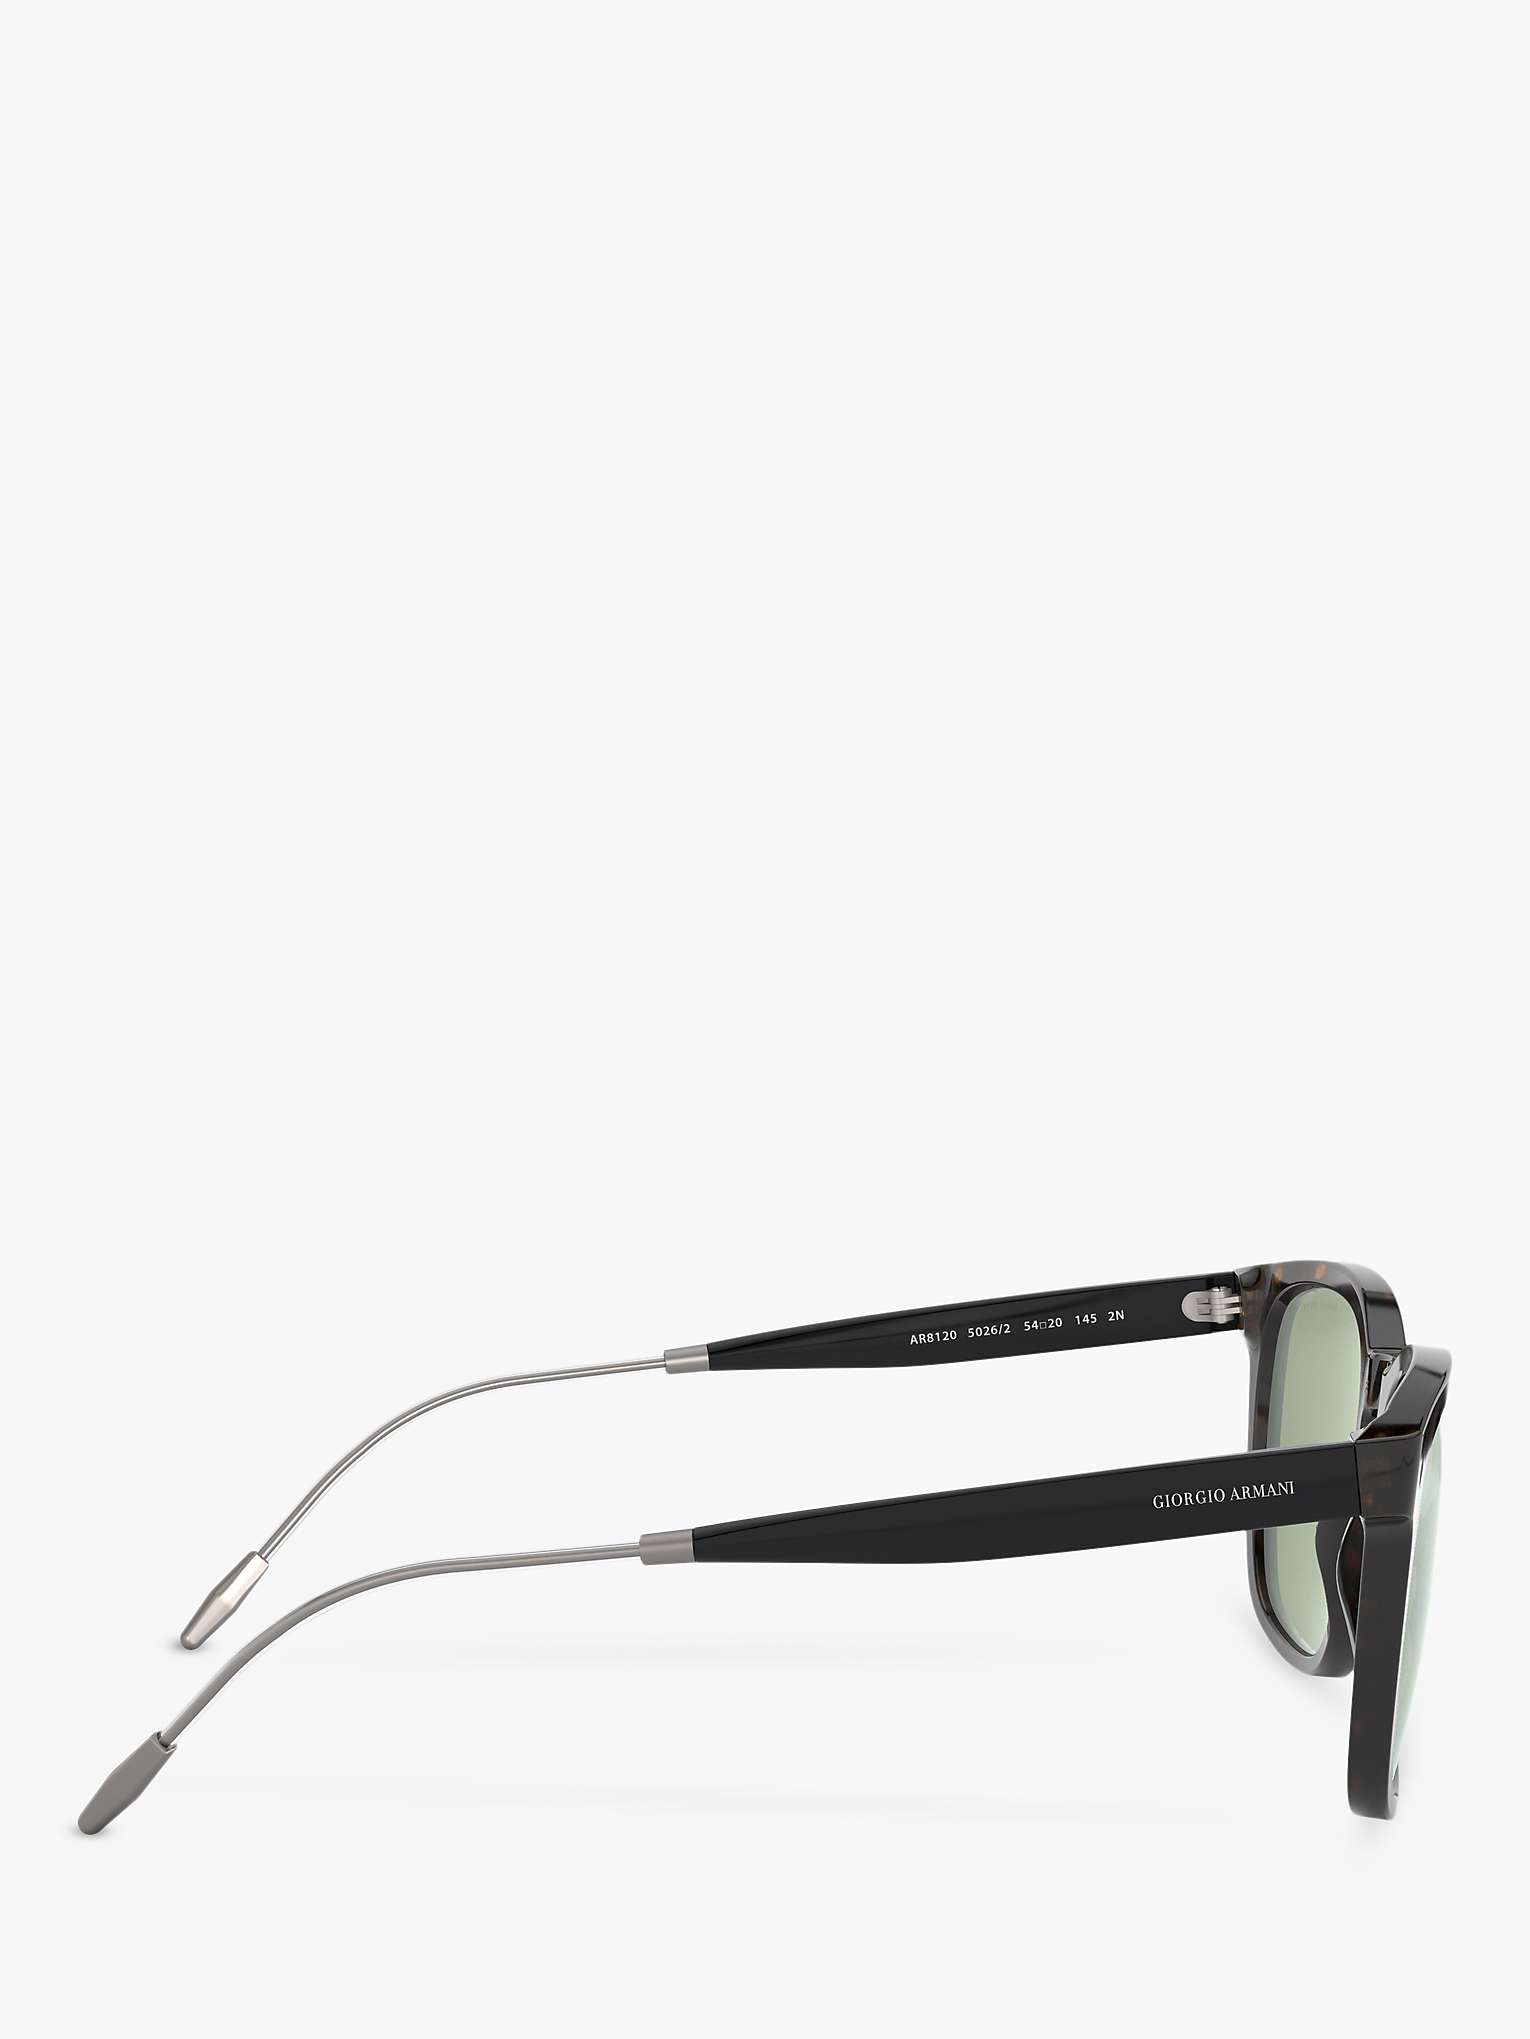 Buy Giorgio Armani AR8120 Men's Square Sunglasses, Tortoise/Green Online at johnlewis.com